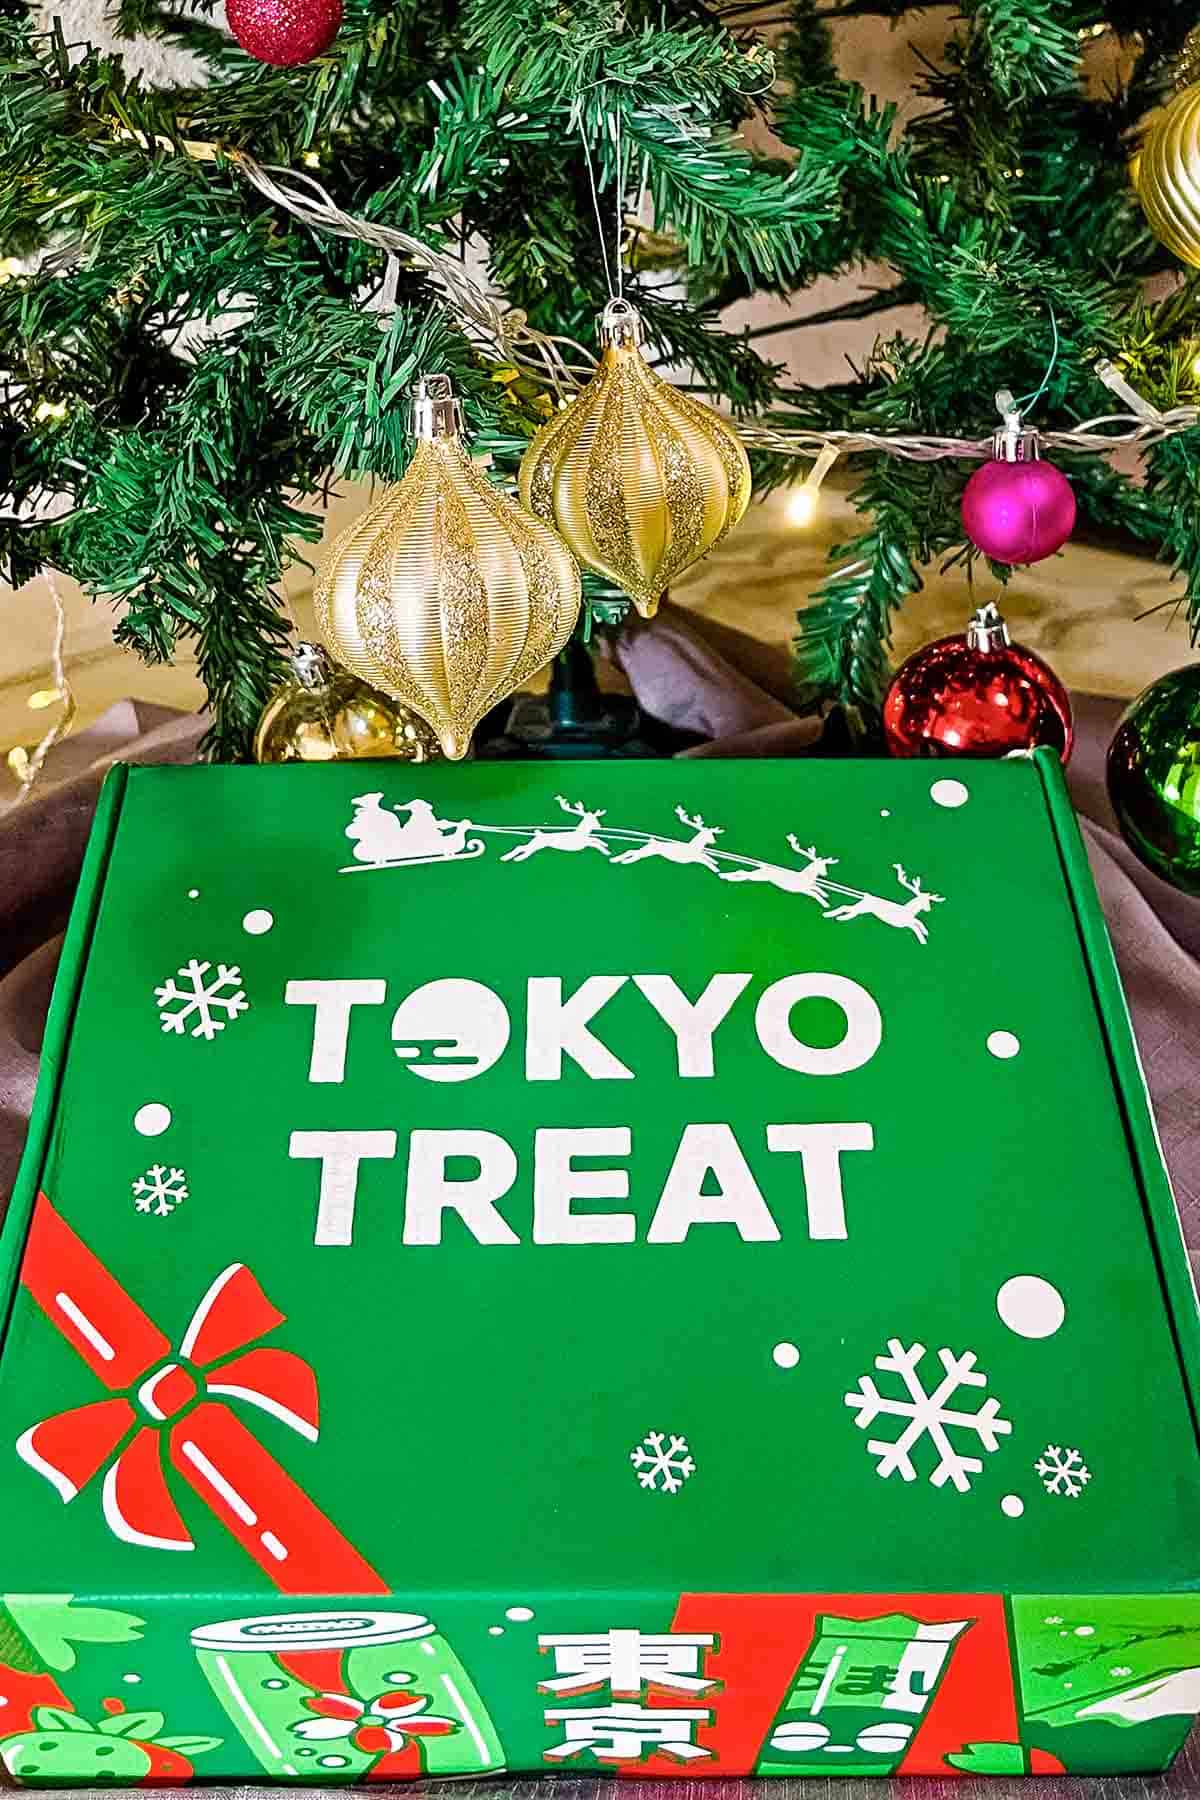 Tokyo Treat snack box under Christmas tree